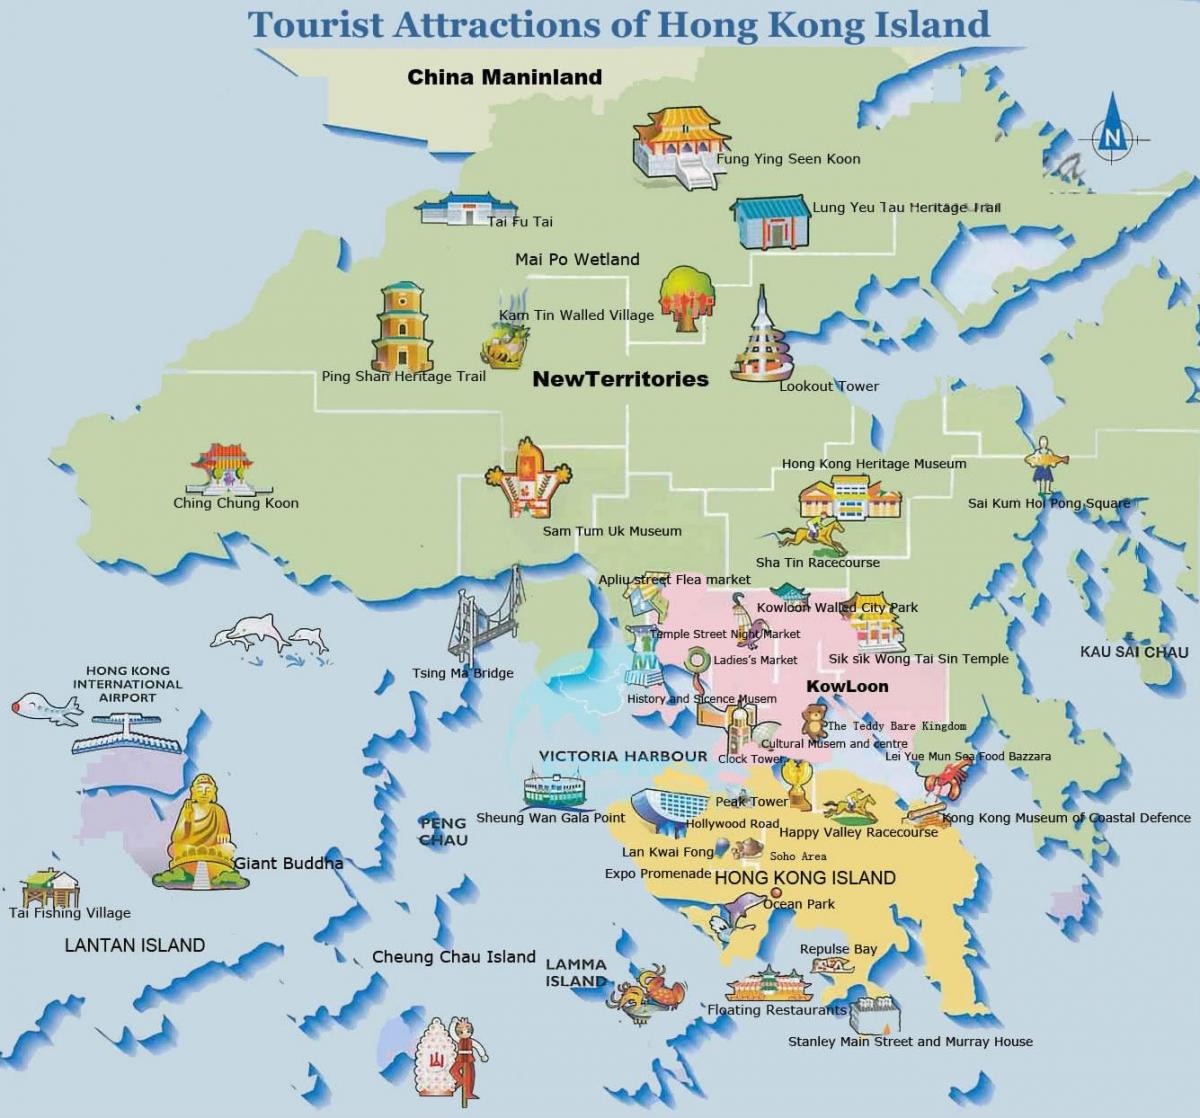 hartă turistică din Hong Kong